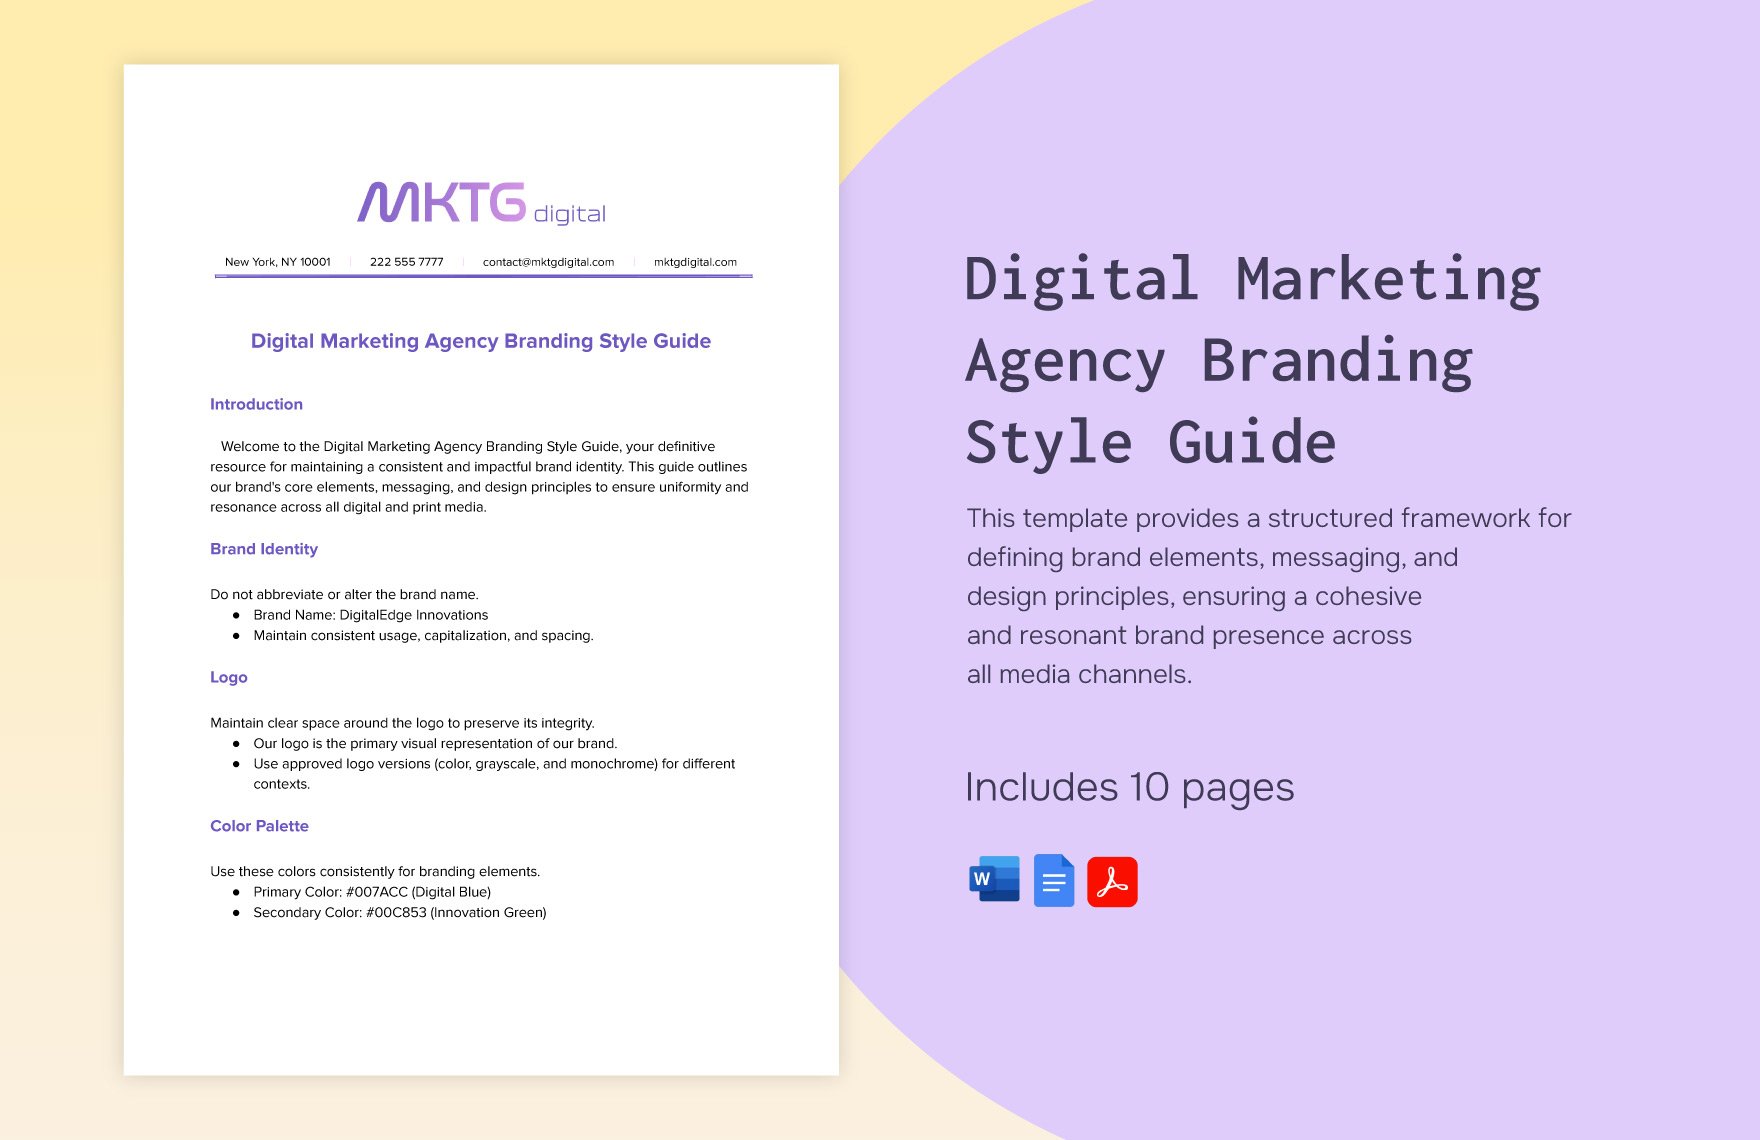 Digital Marketing Agency Branding Style Guide Template in Word, Google Docs, PDF